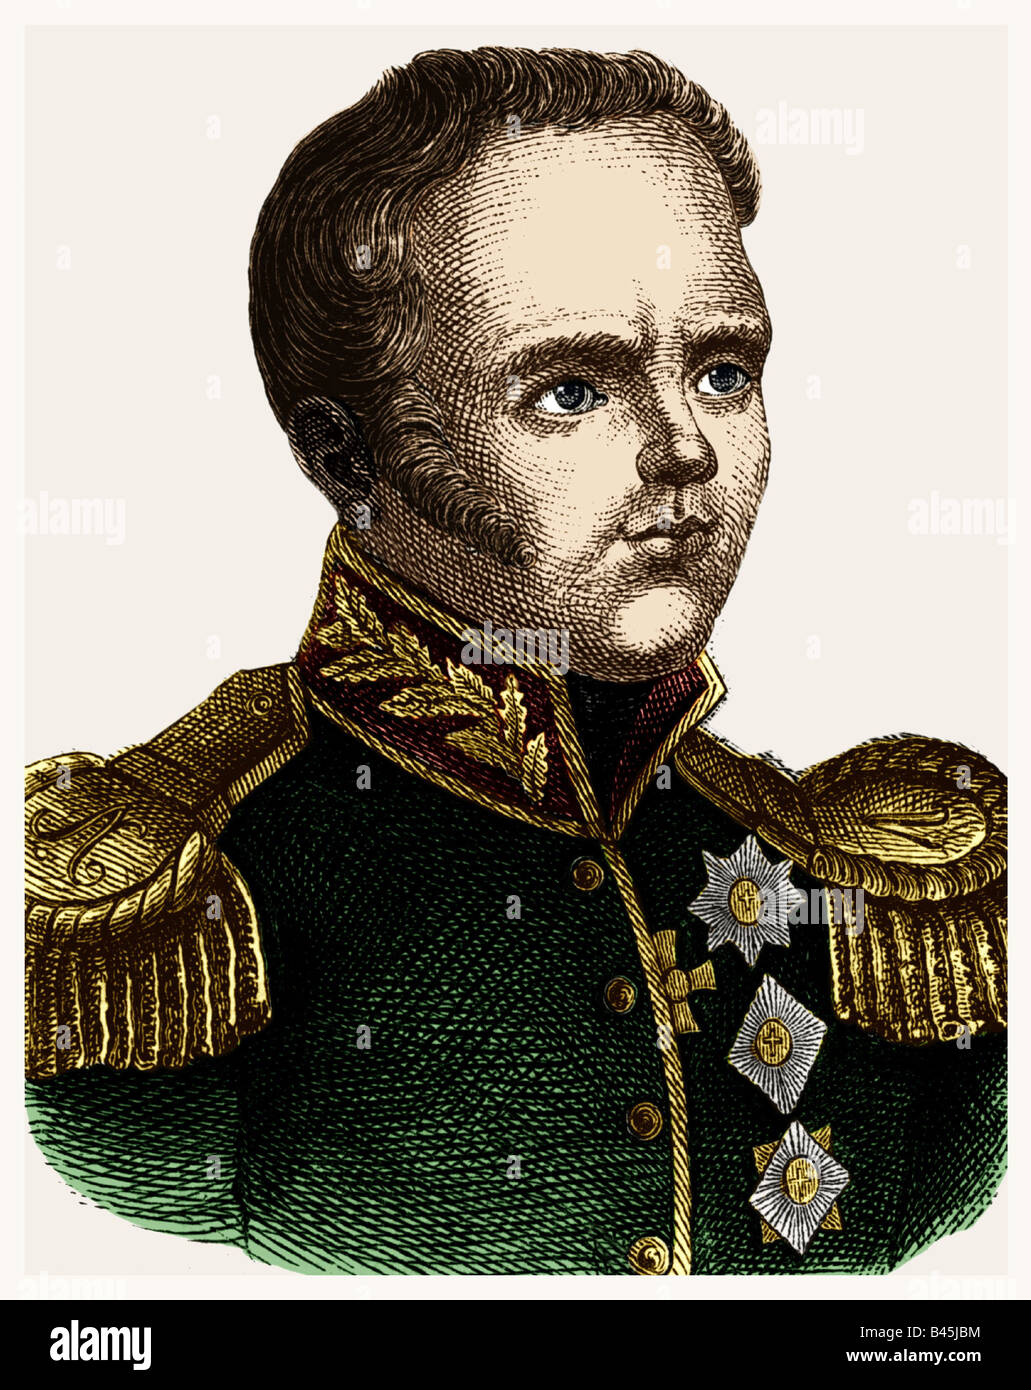 Constantine Pavlovich, 8.5.1779 - 27.6.1831, Grand Duke of Russia, portrait, engraving, 19th century, Romanov, , Stock Photo